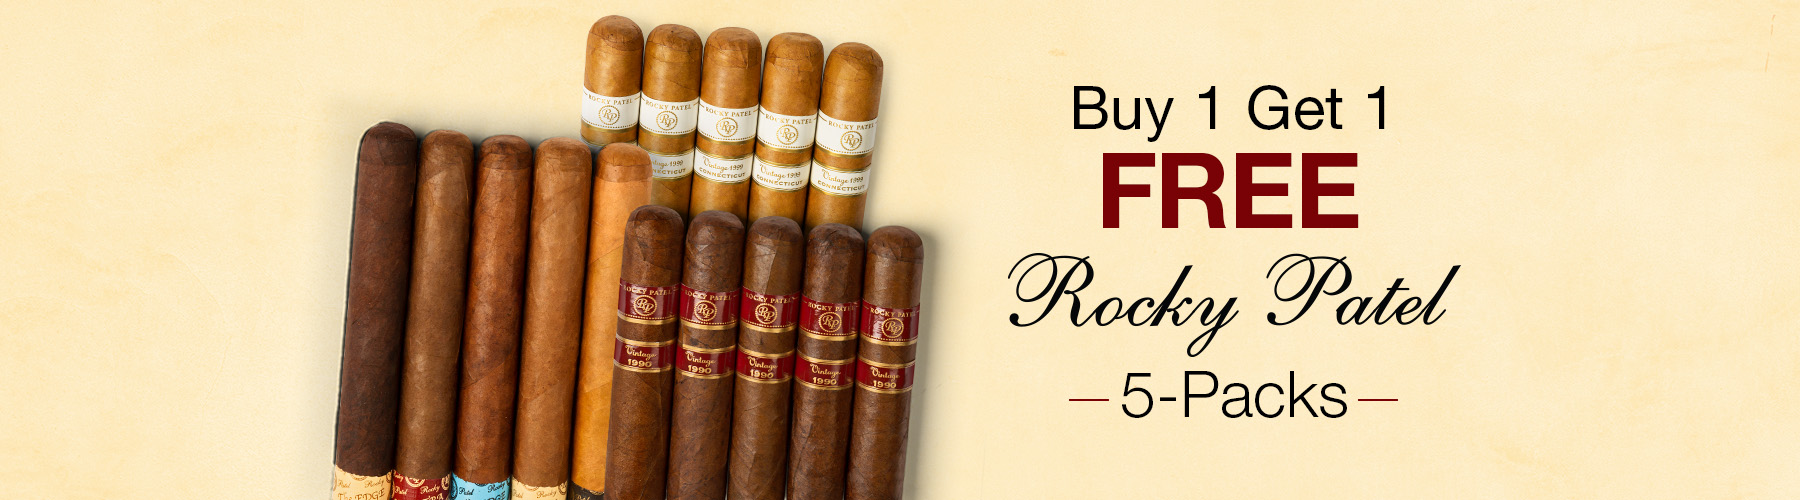 Buy 1, Get 1 Free Rocky Patel 5-Packs!